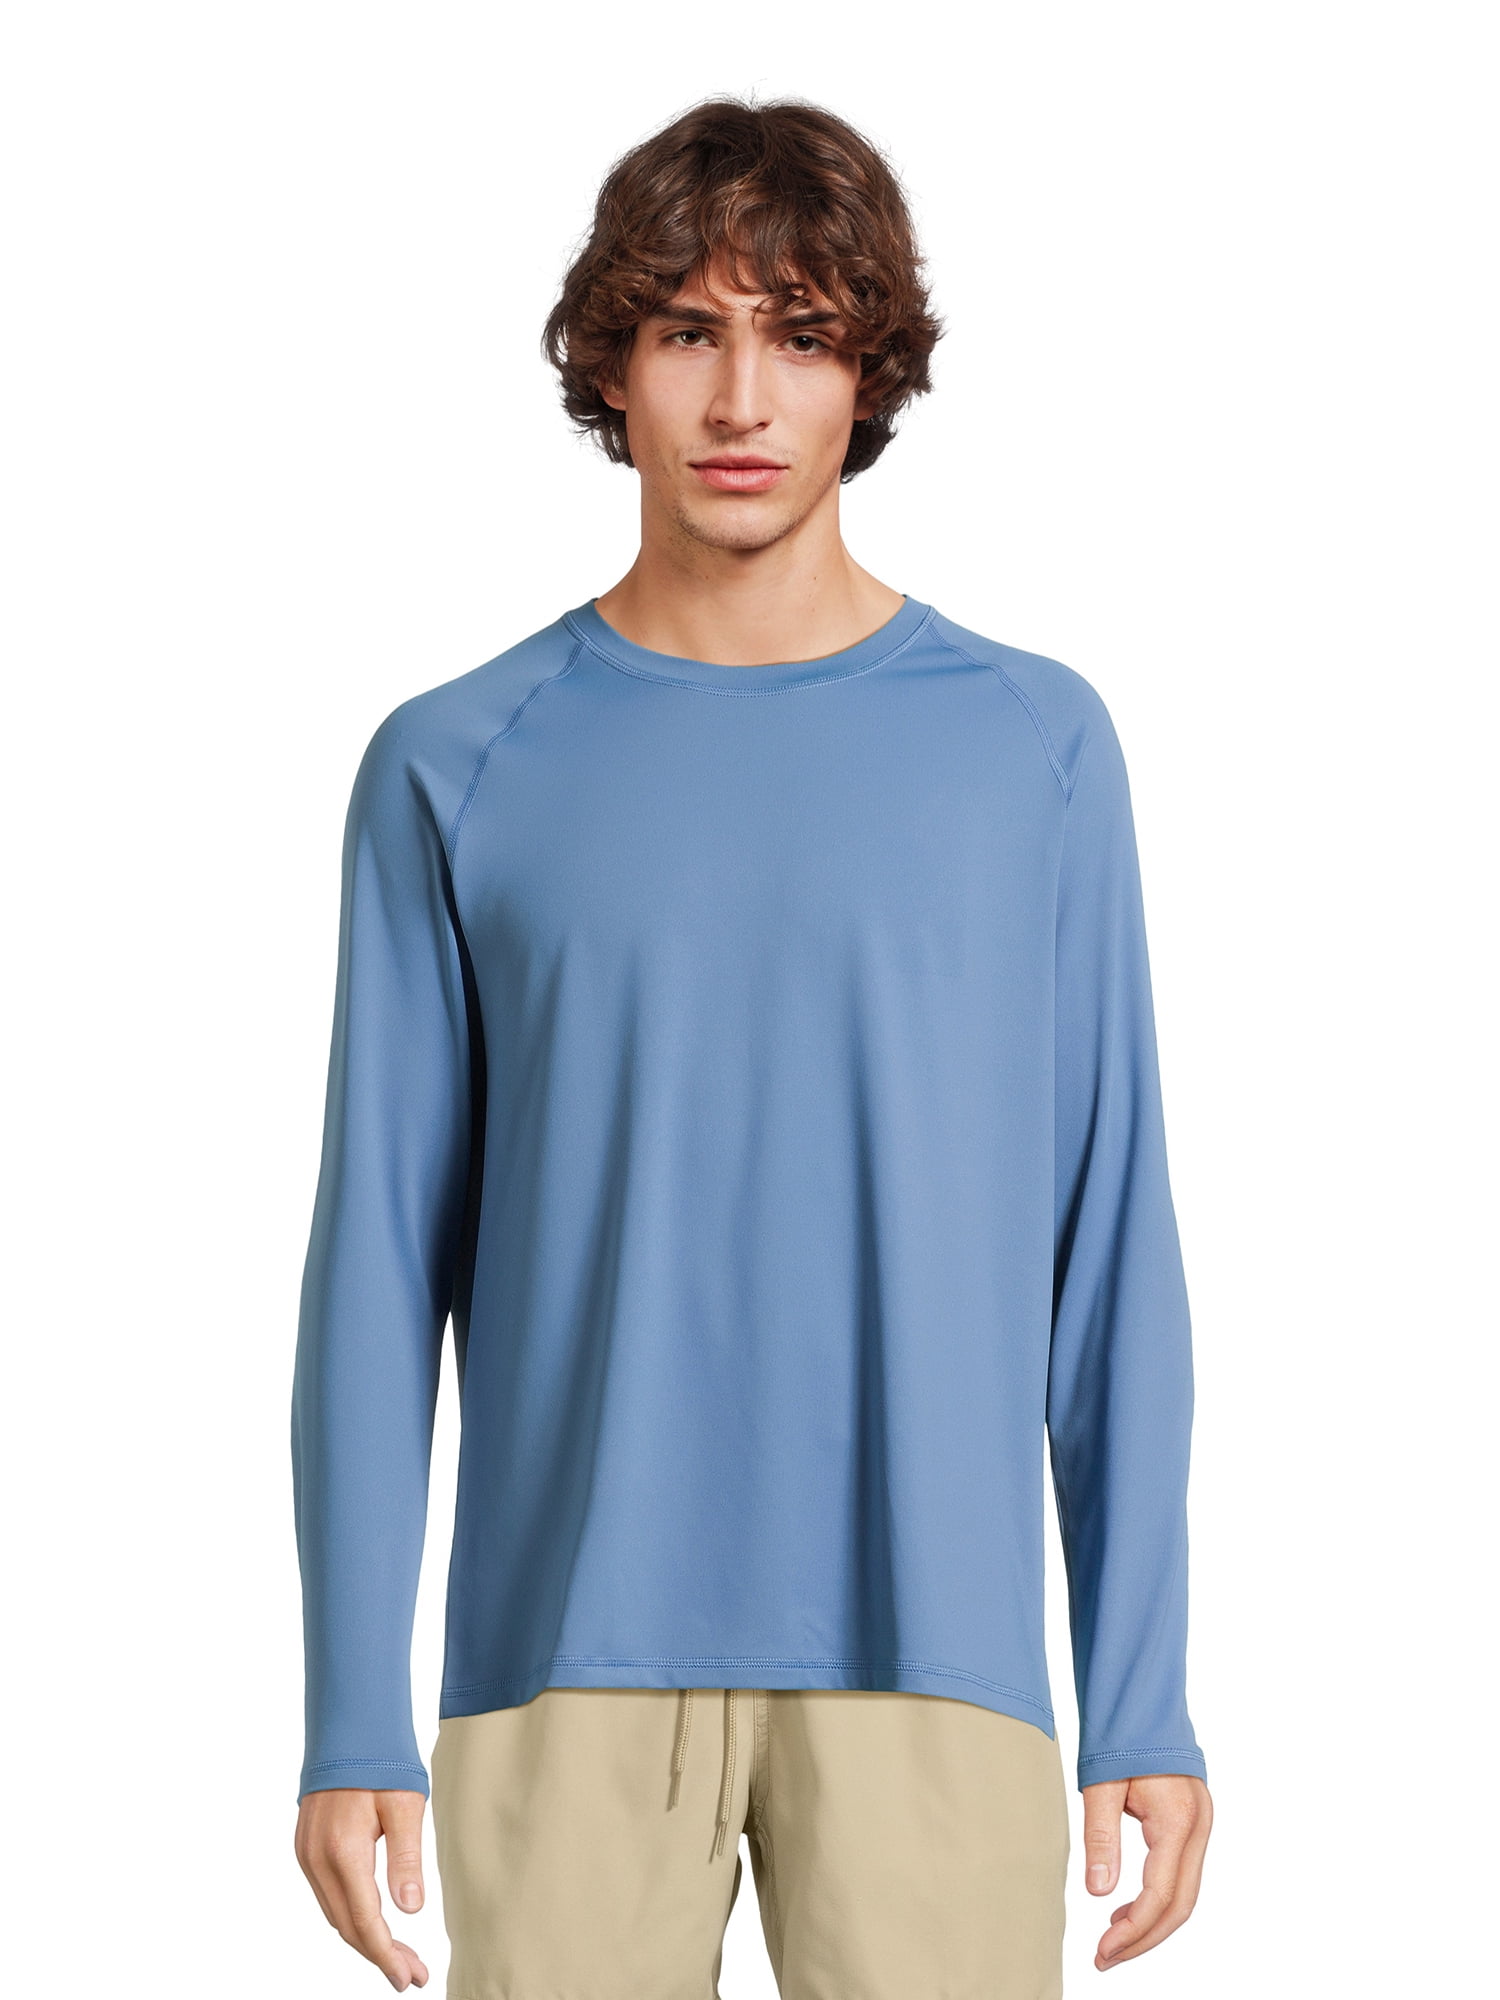 George Men’s Sun Shirt with Long Sleeves, Sizes S-3XL - Walmart.com